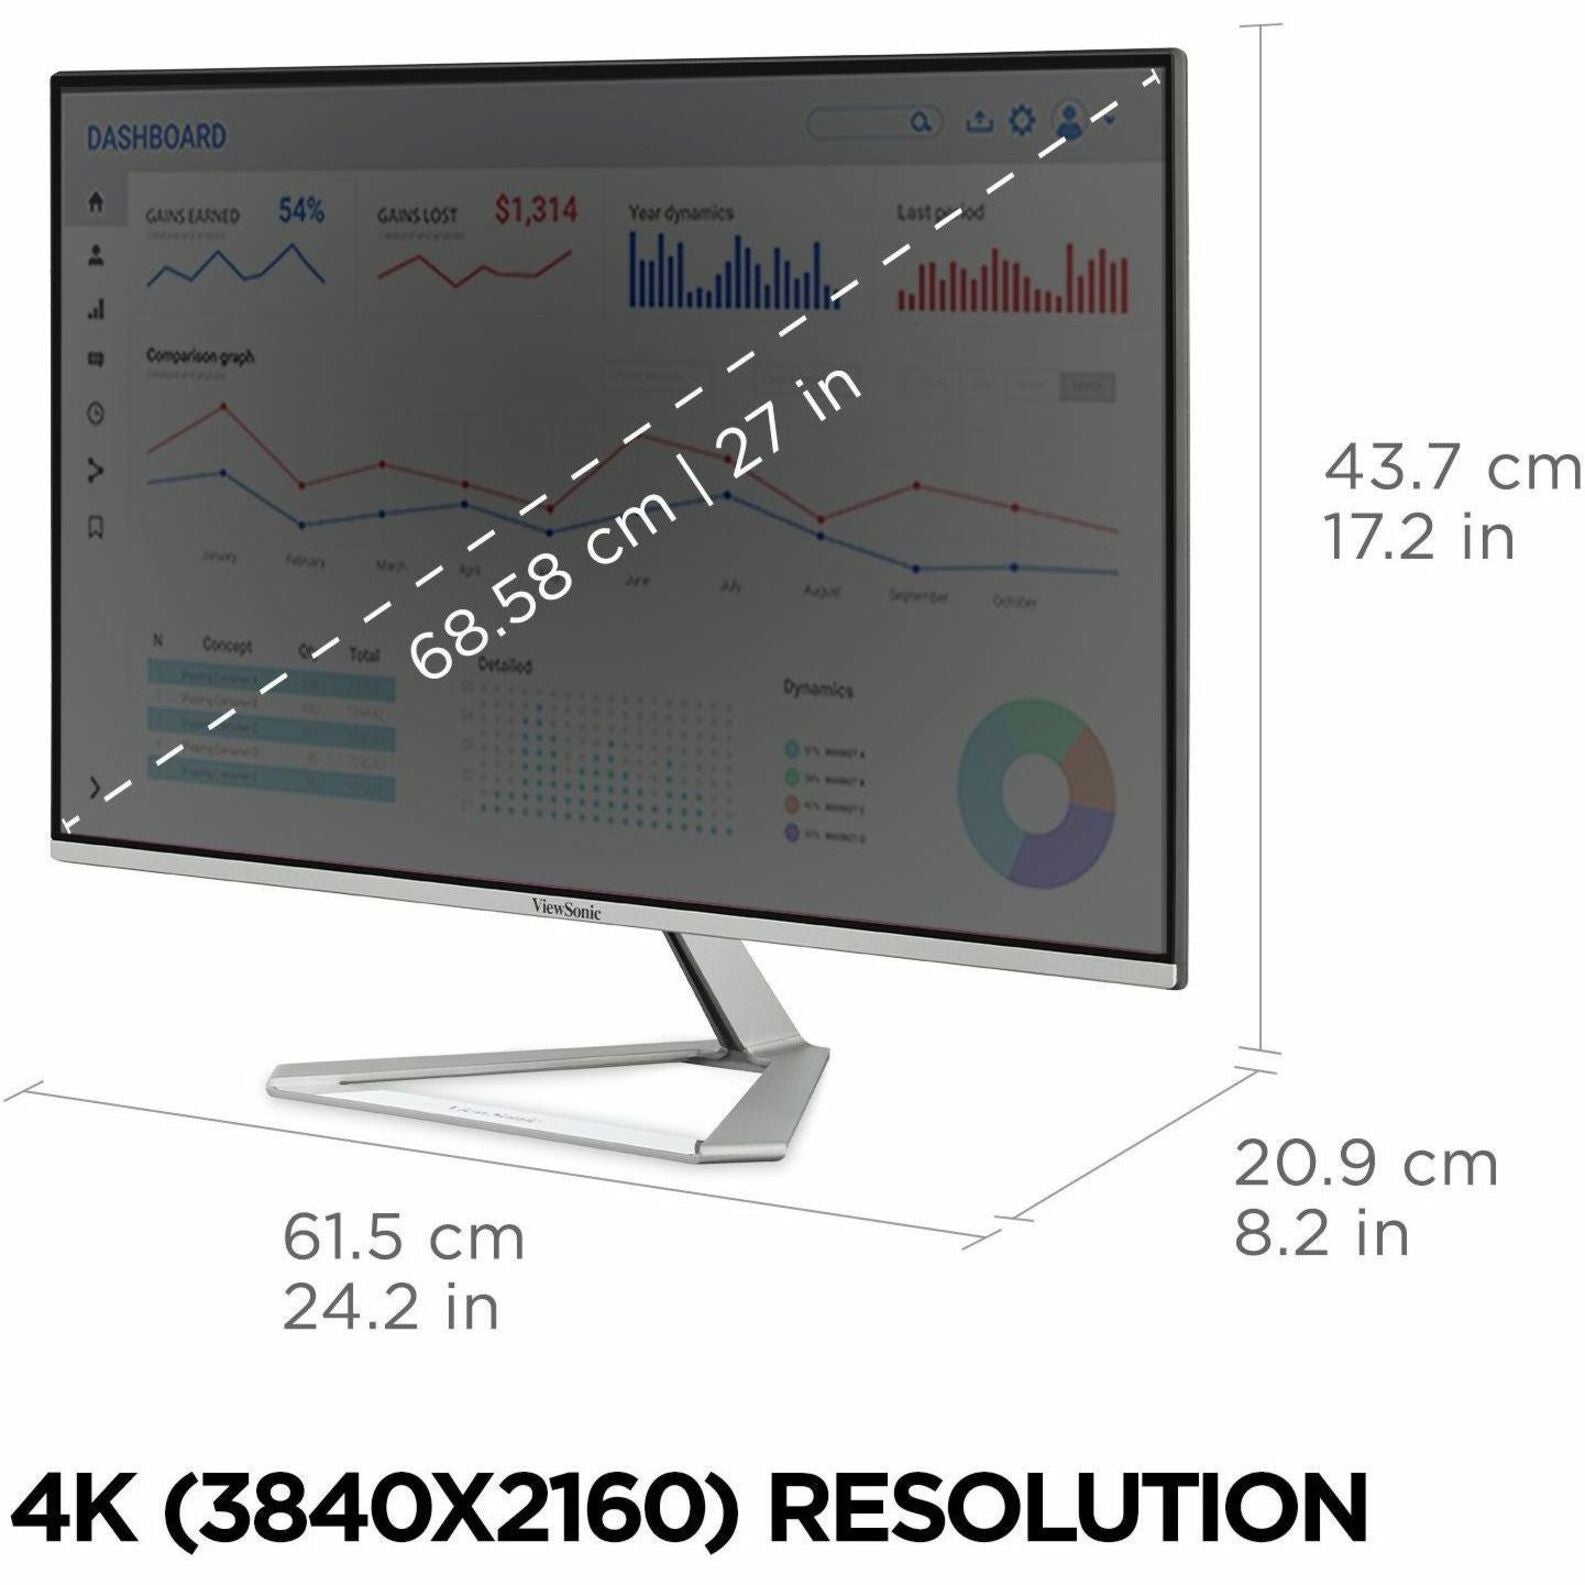 ViewSonic VX2776-4K-MHDU 27" 4K UHD Thin-Bezel IPS Monitor with USB-C, HDMI, and DisplayPort, 1ms Response Time, 350 Nit Brightness, 1.07 Billion Colors